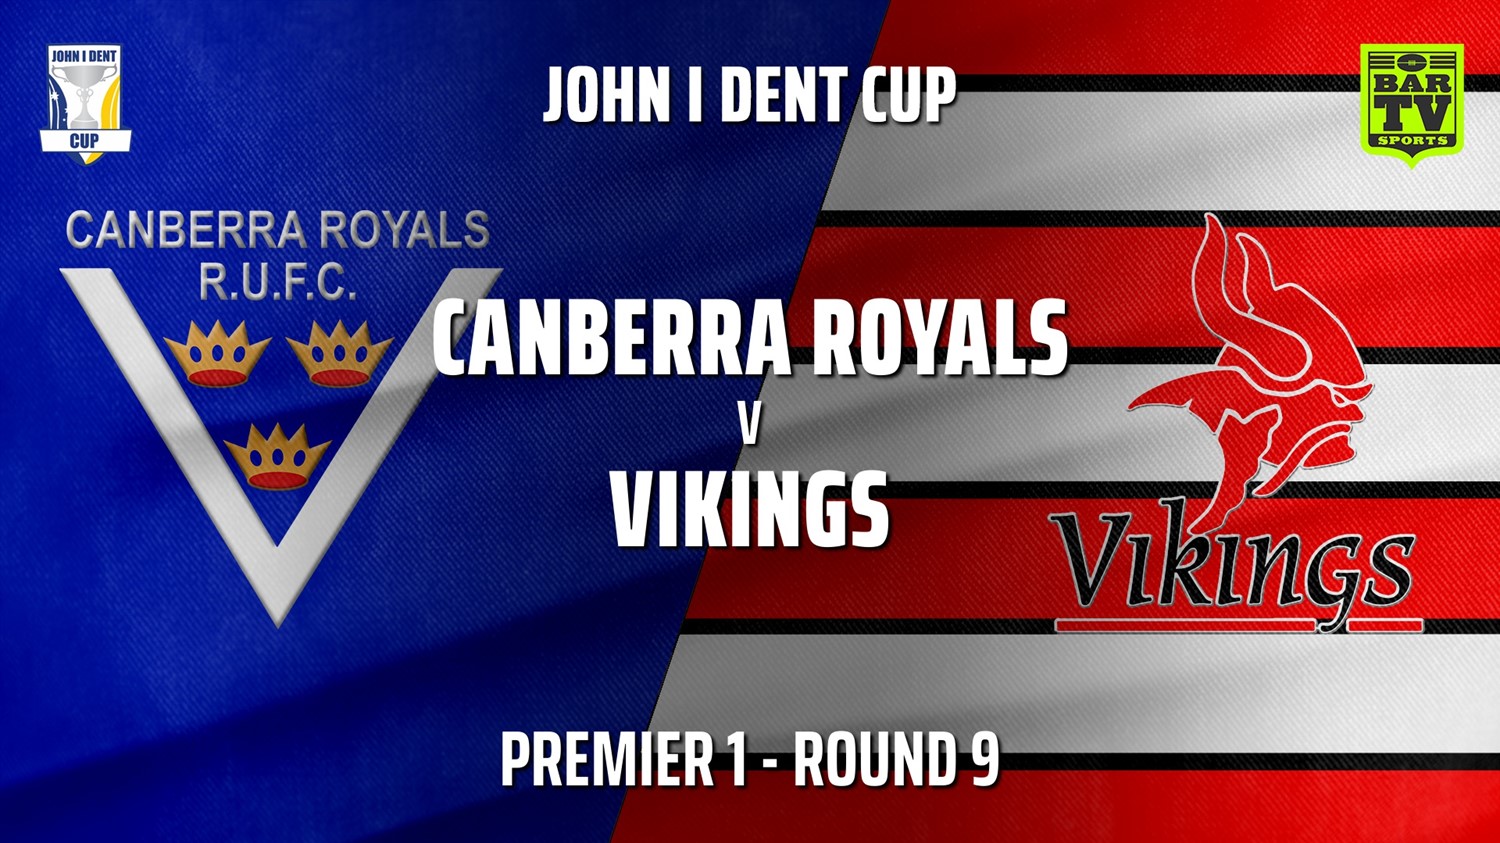 210626-John I Dent (ACT) Round 9 - Premier 1 - Canberra Royals v Tuggeranong Vikings Minigame Slate Image